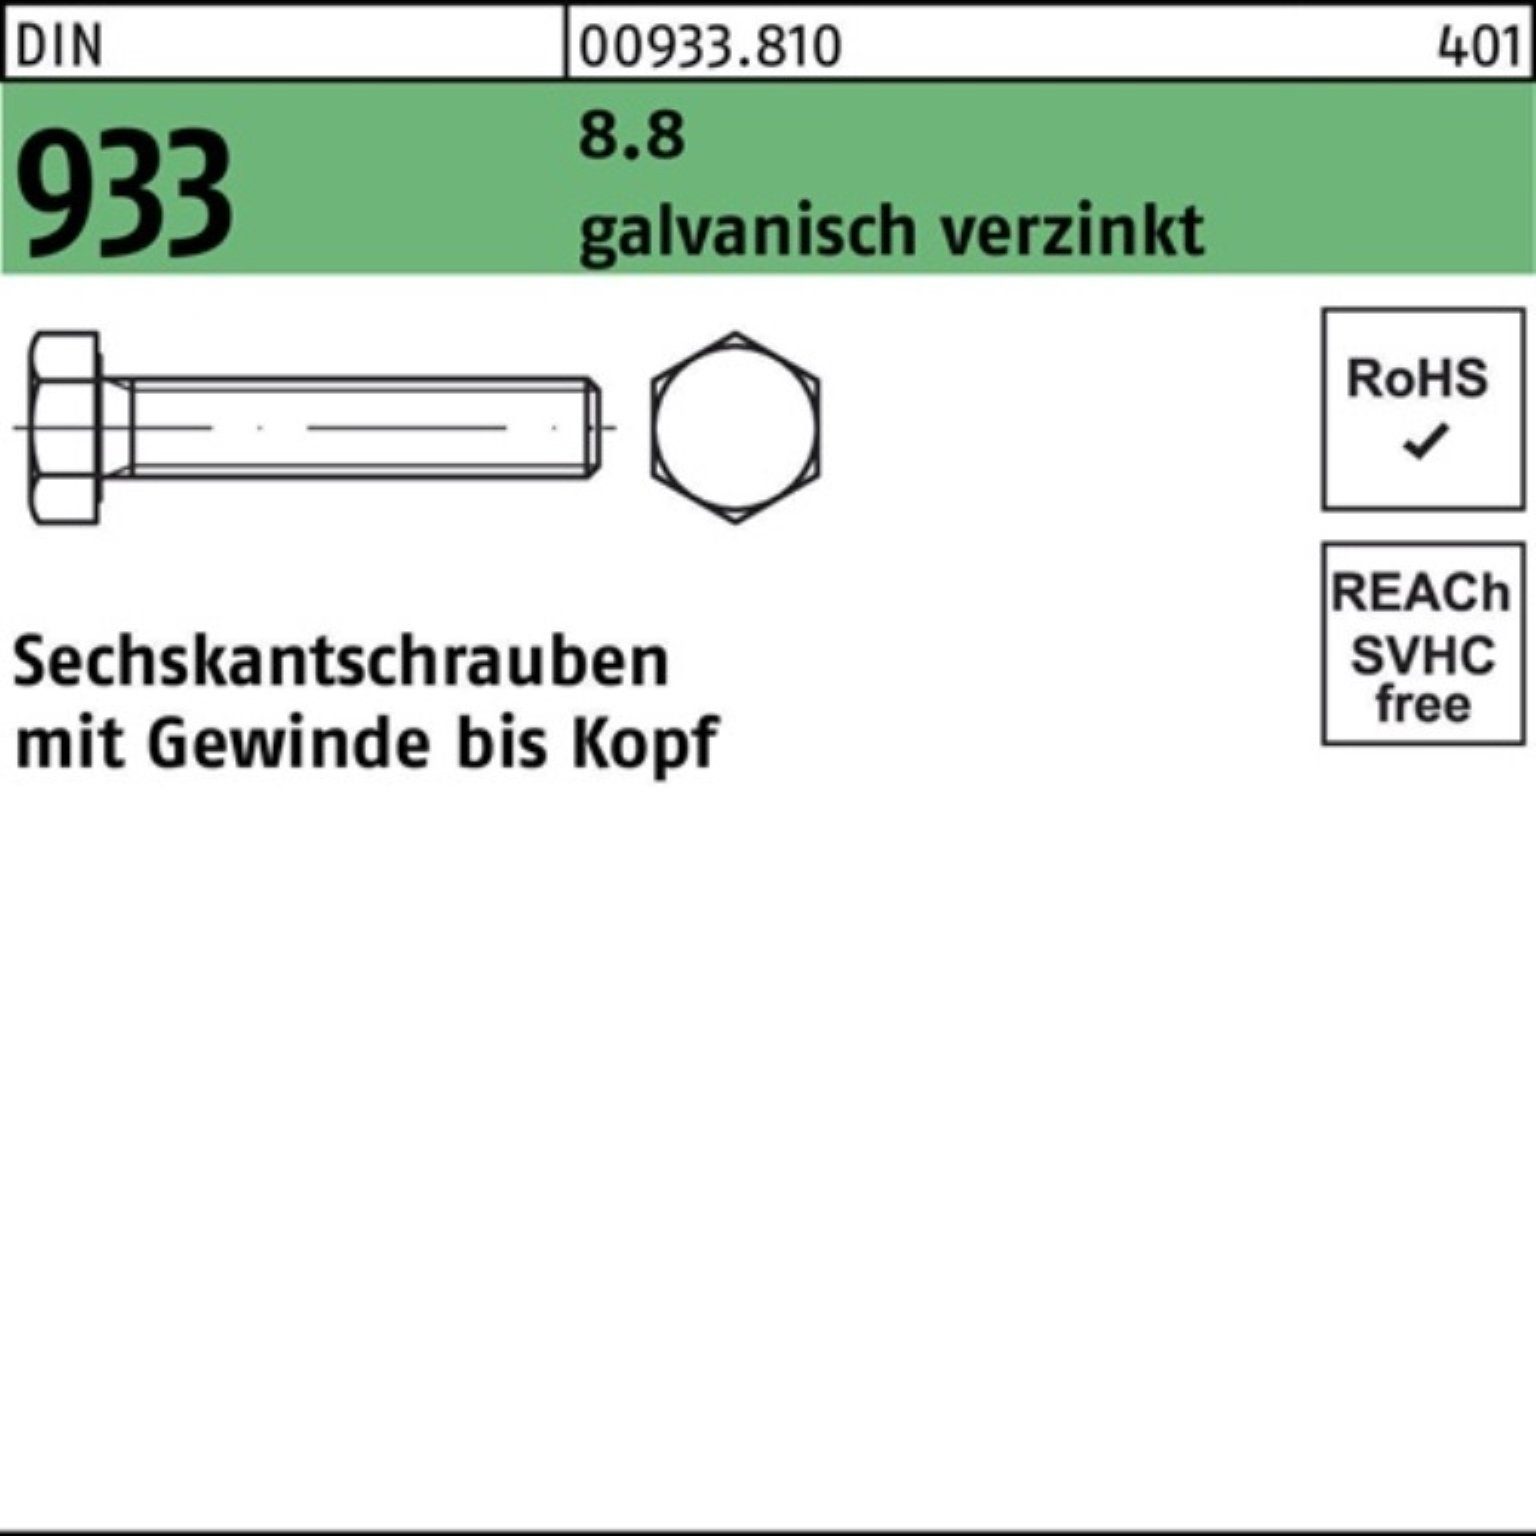 Preisbewusst Reyher Sechskantschraube 8.8 Stü VG 65 Sechskantschraube M18x DIN Pack 933 100er galv.verz. 25